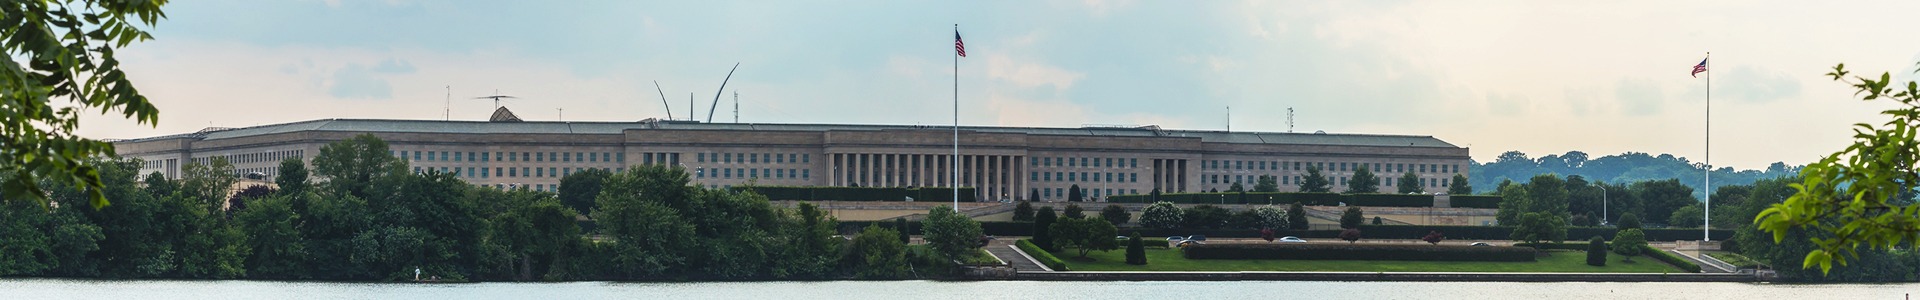 photo of the pentagon